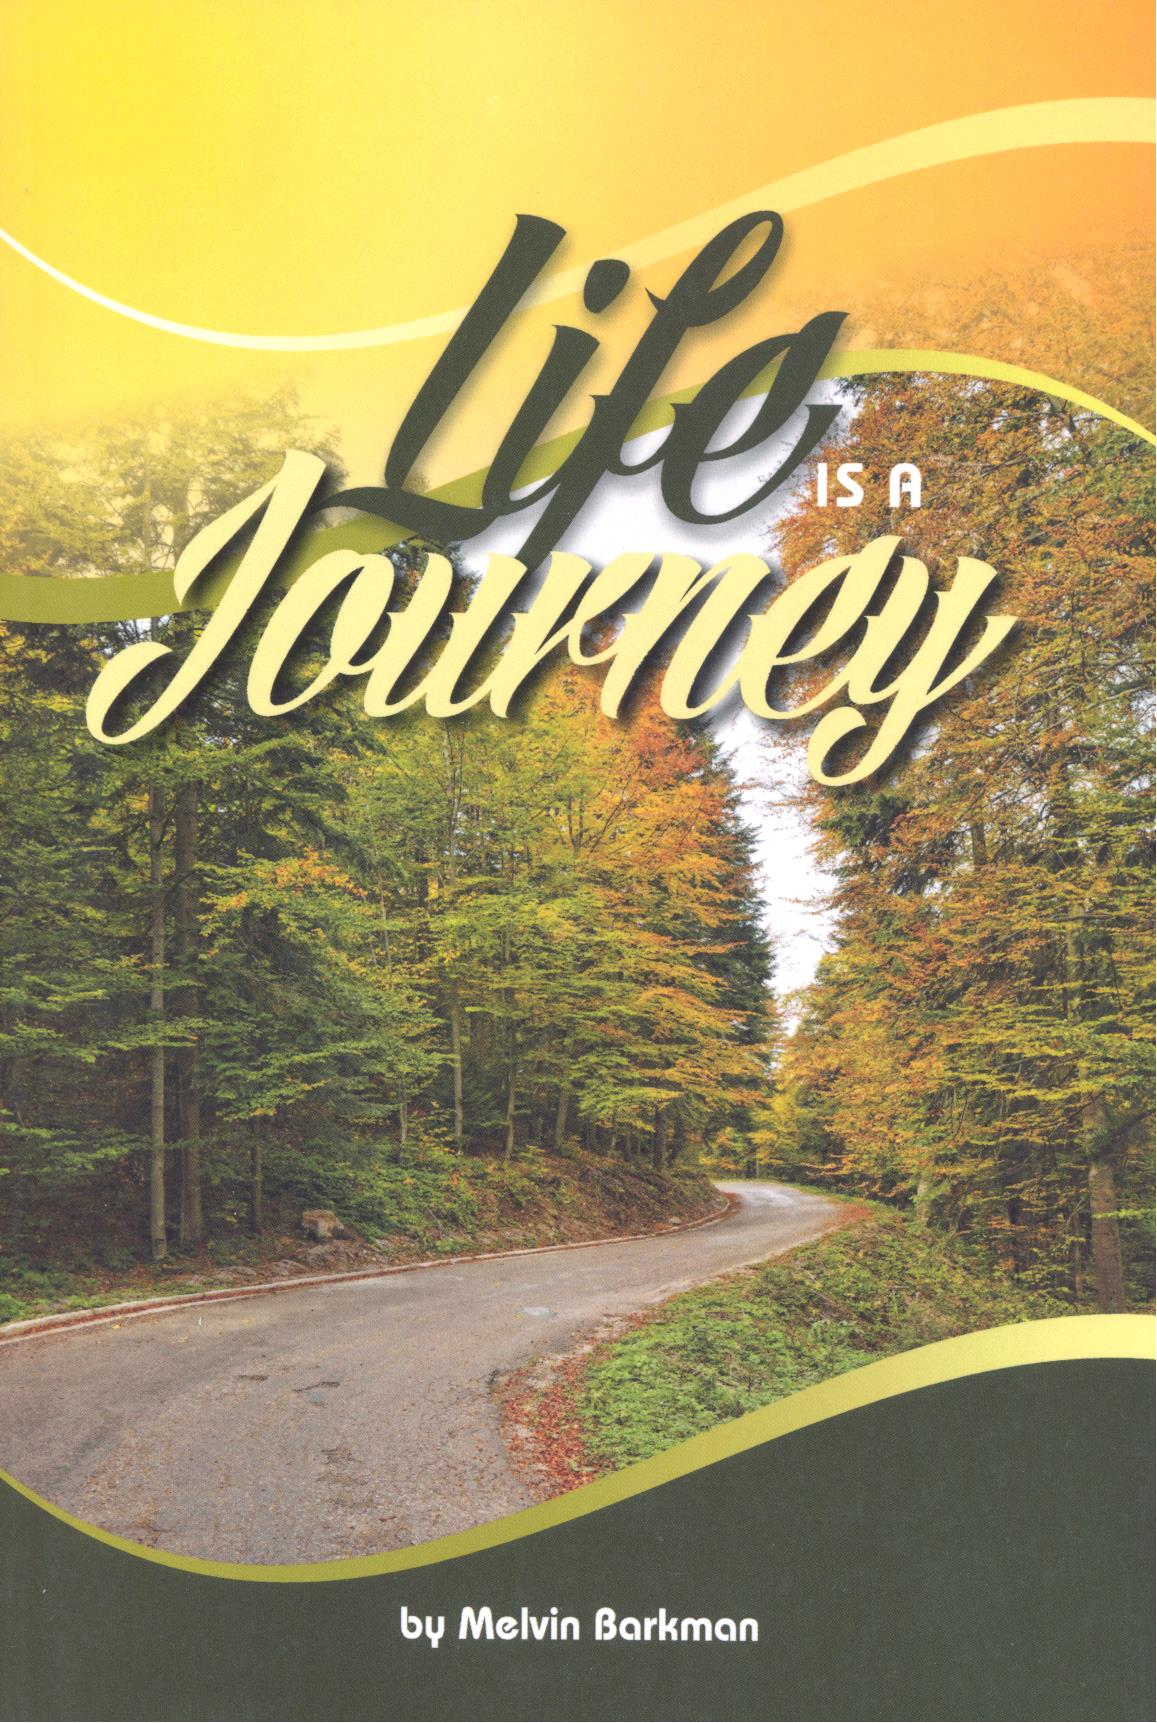 journey of life dvd